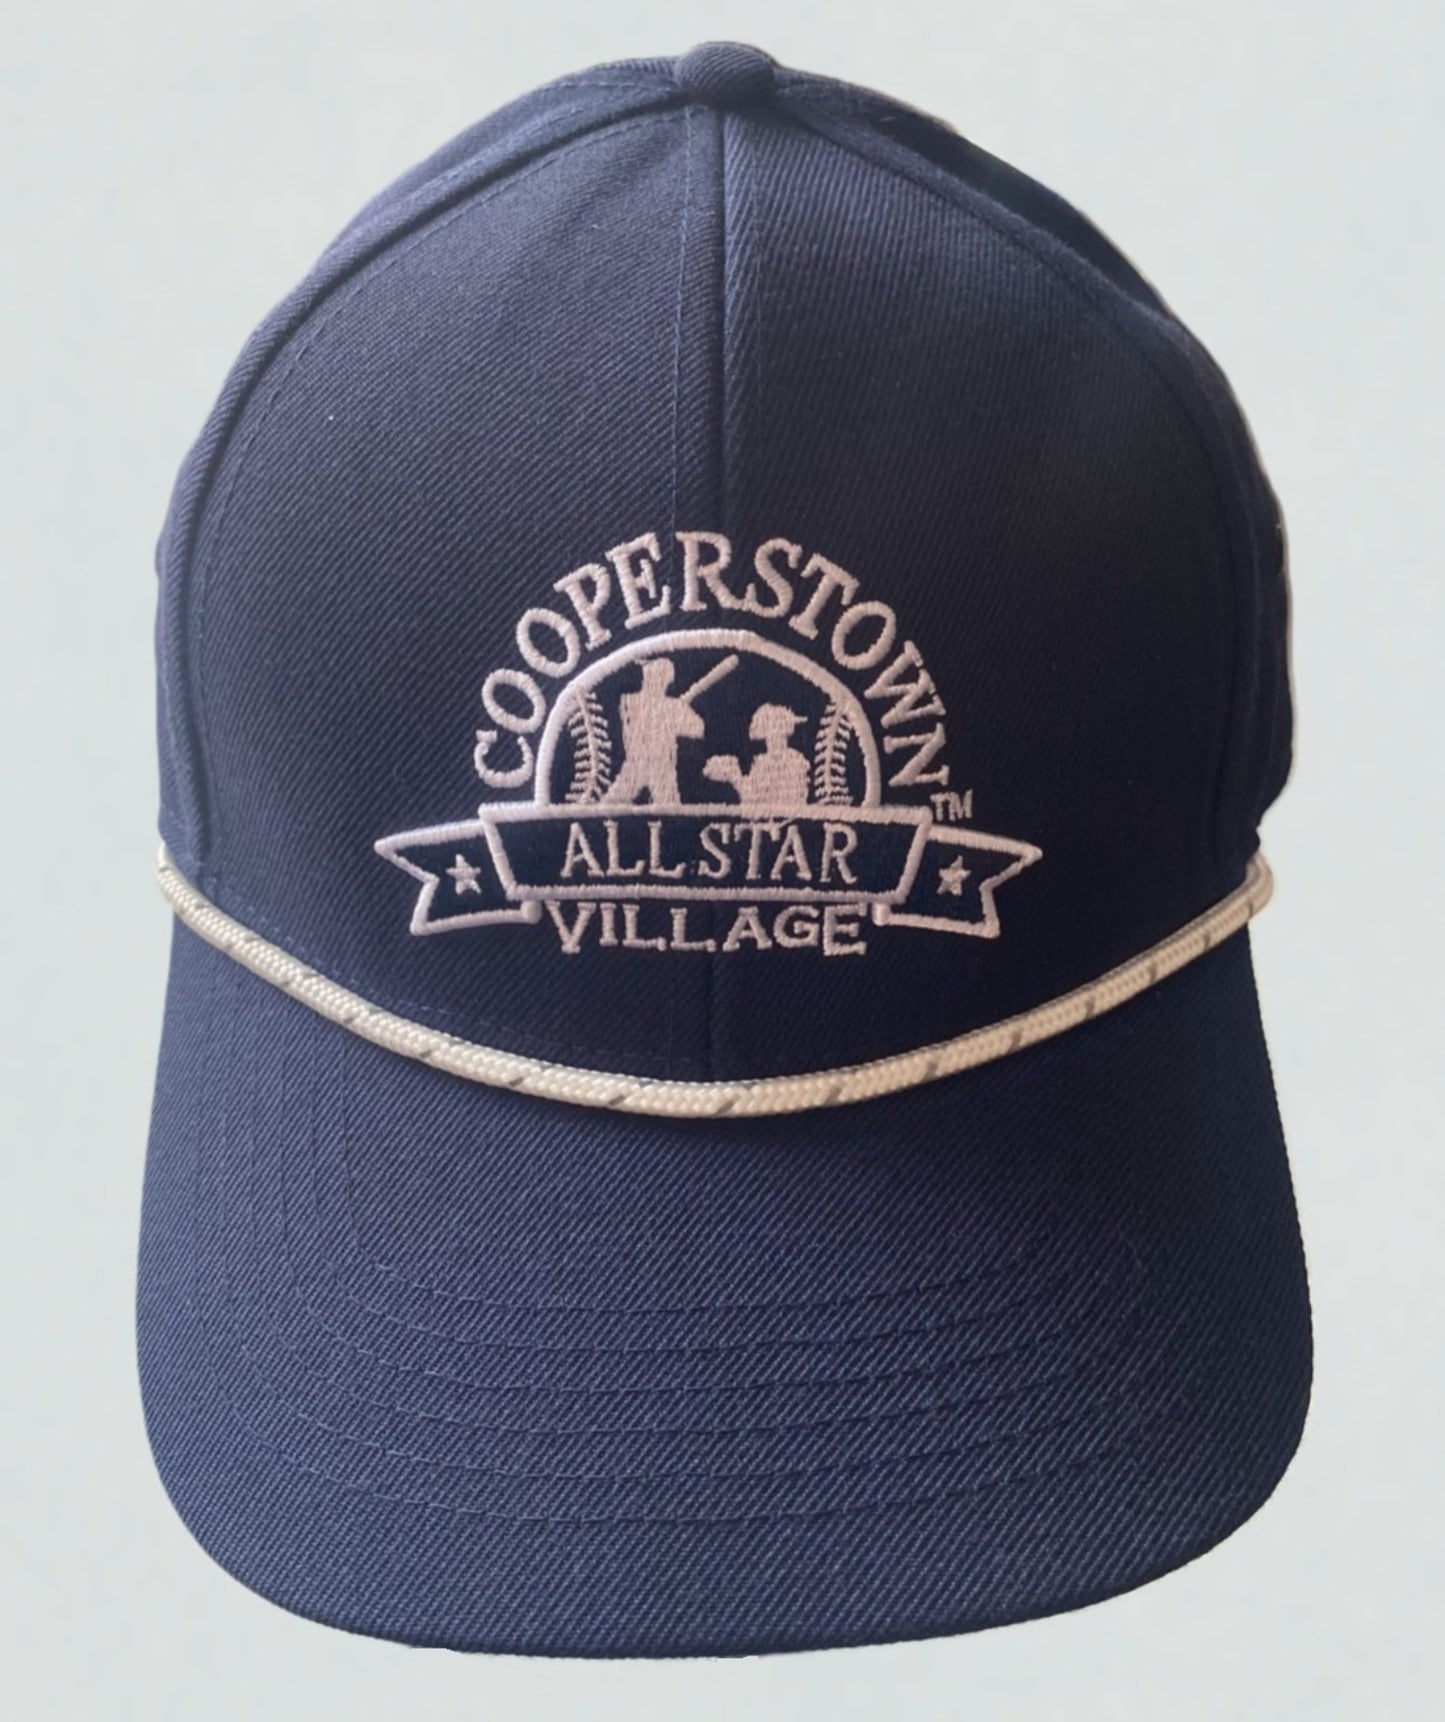 Vintage Navy Rope Baseball Cap